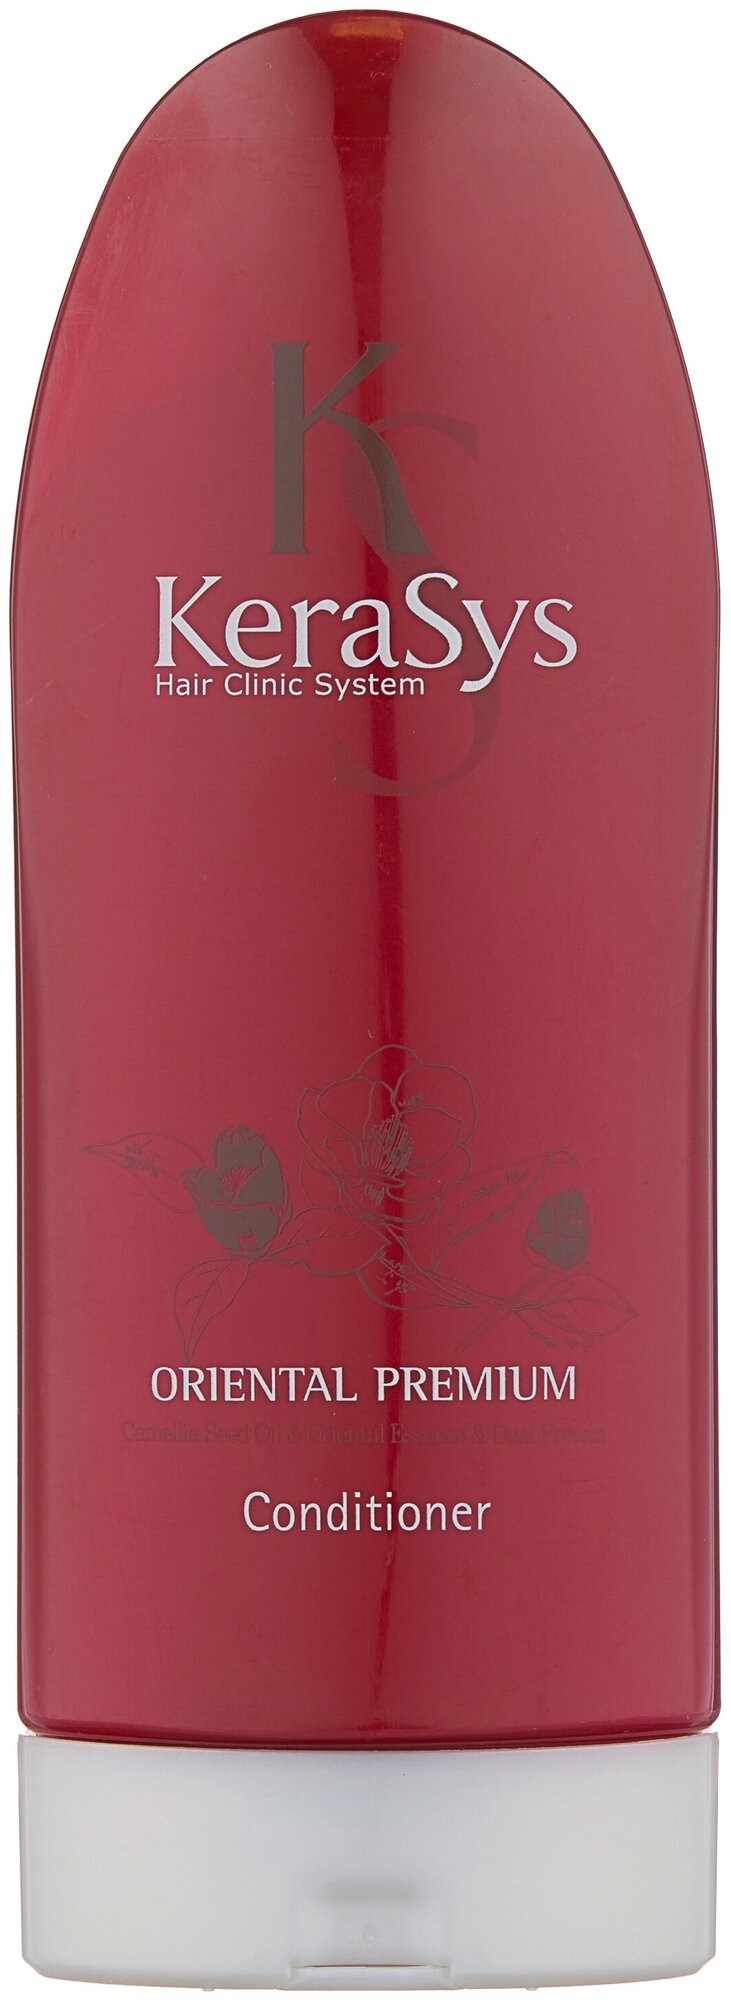 KeraSys кондиционер Oriental Premium для всех типов волос